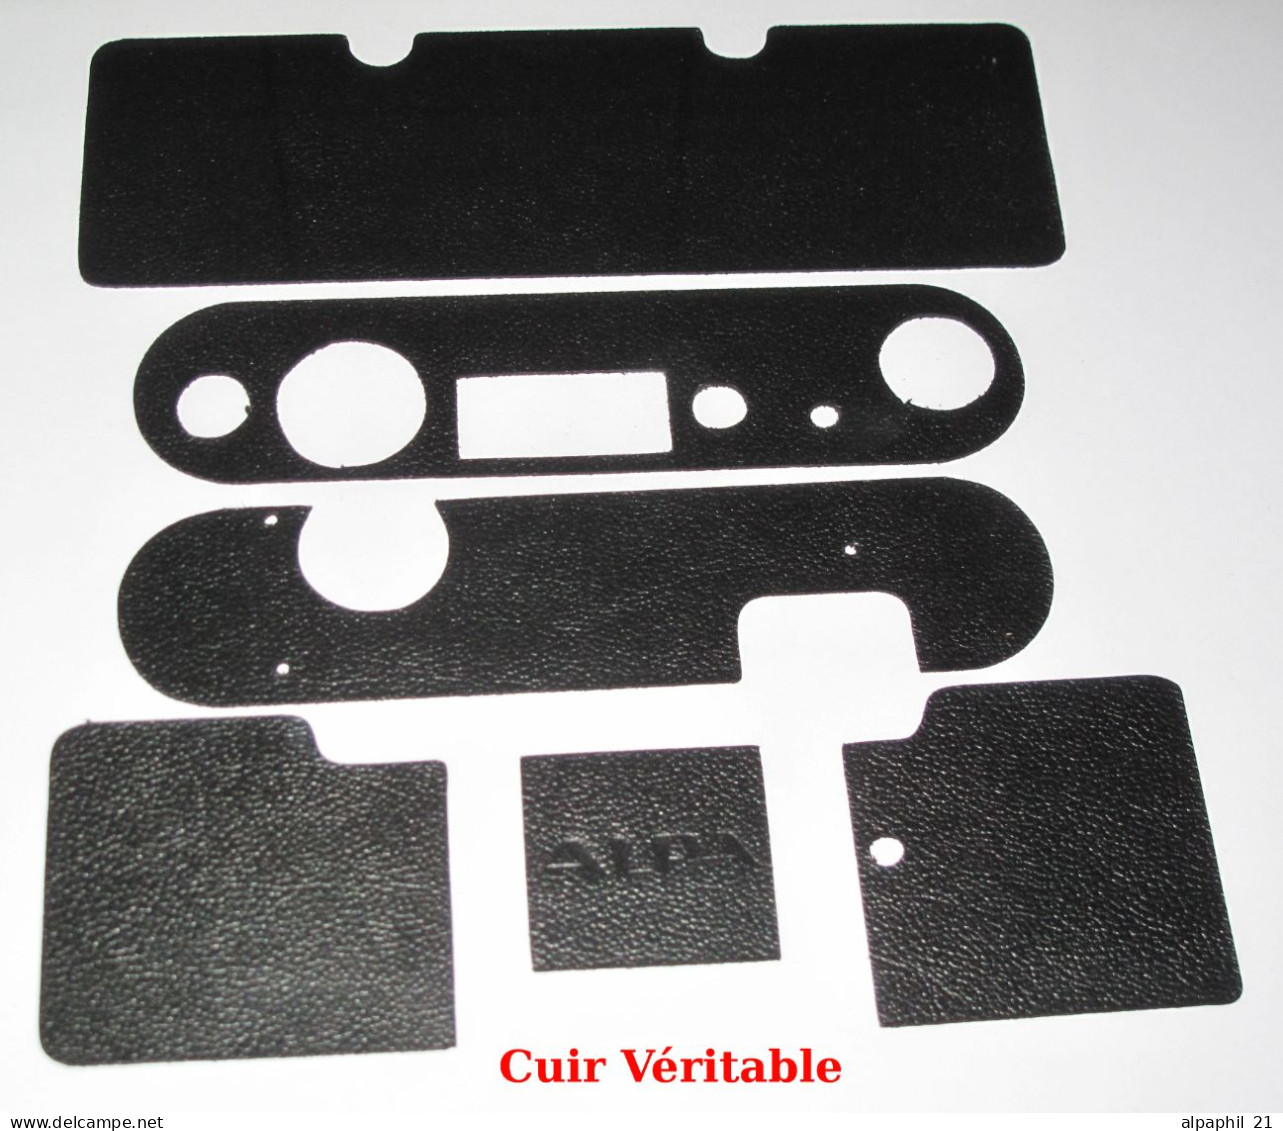 Alpa Reflex, Black Veritable Leather For Alpa Standard - Material Y Accesorios